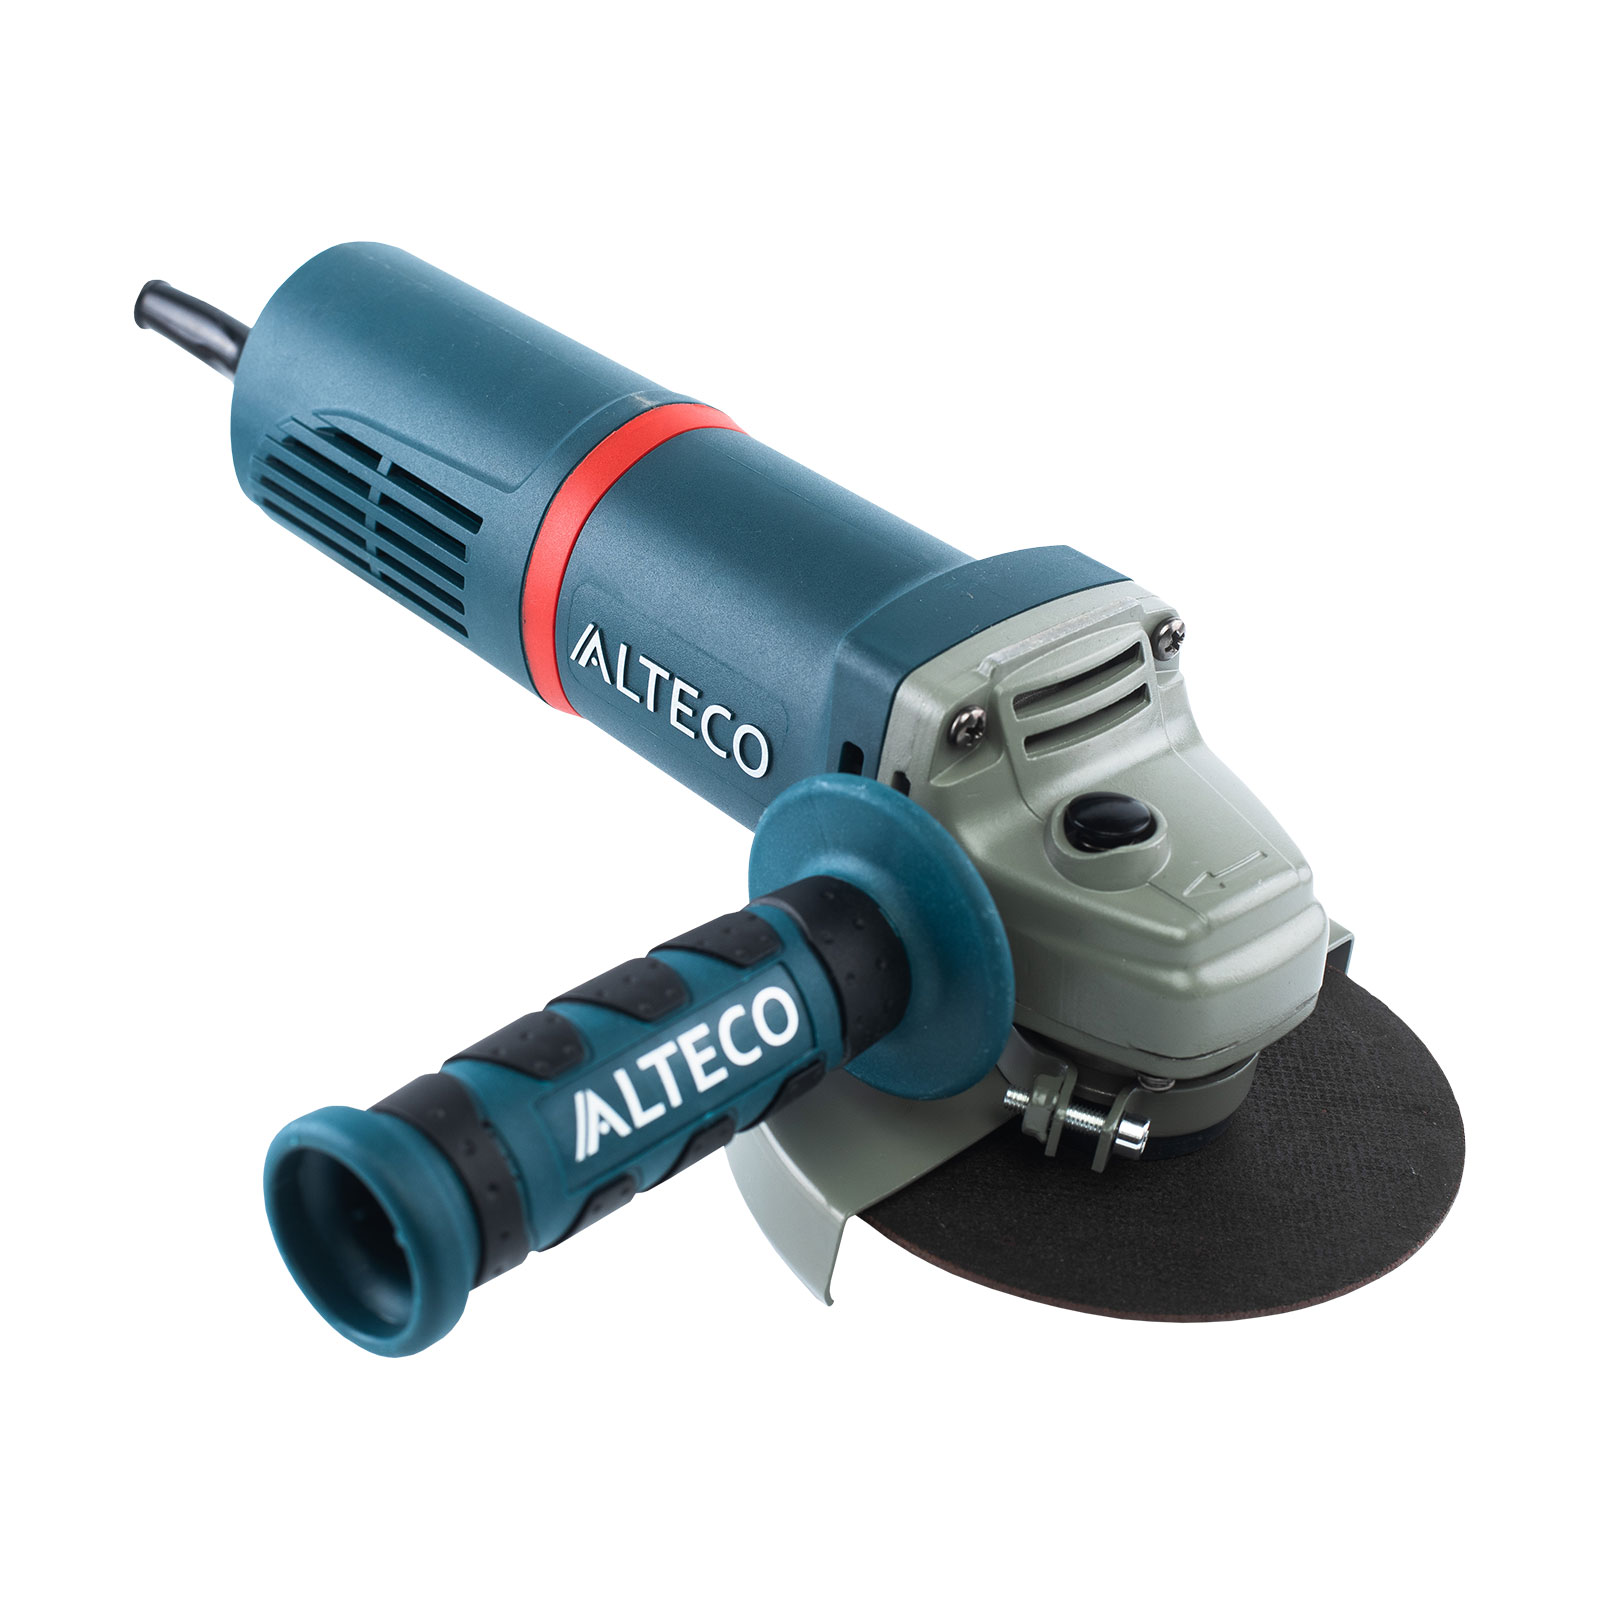 УШМ (болгарка) Alteco Professional AG 850-125.1, сетевая, 850Вт, 125мм, 11000 об/мин (21600)